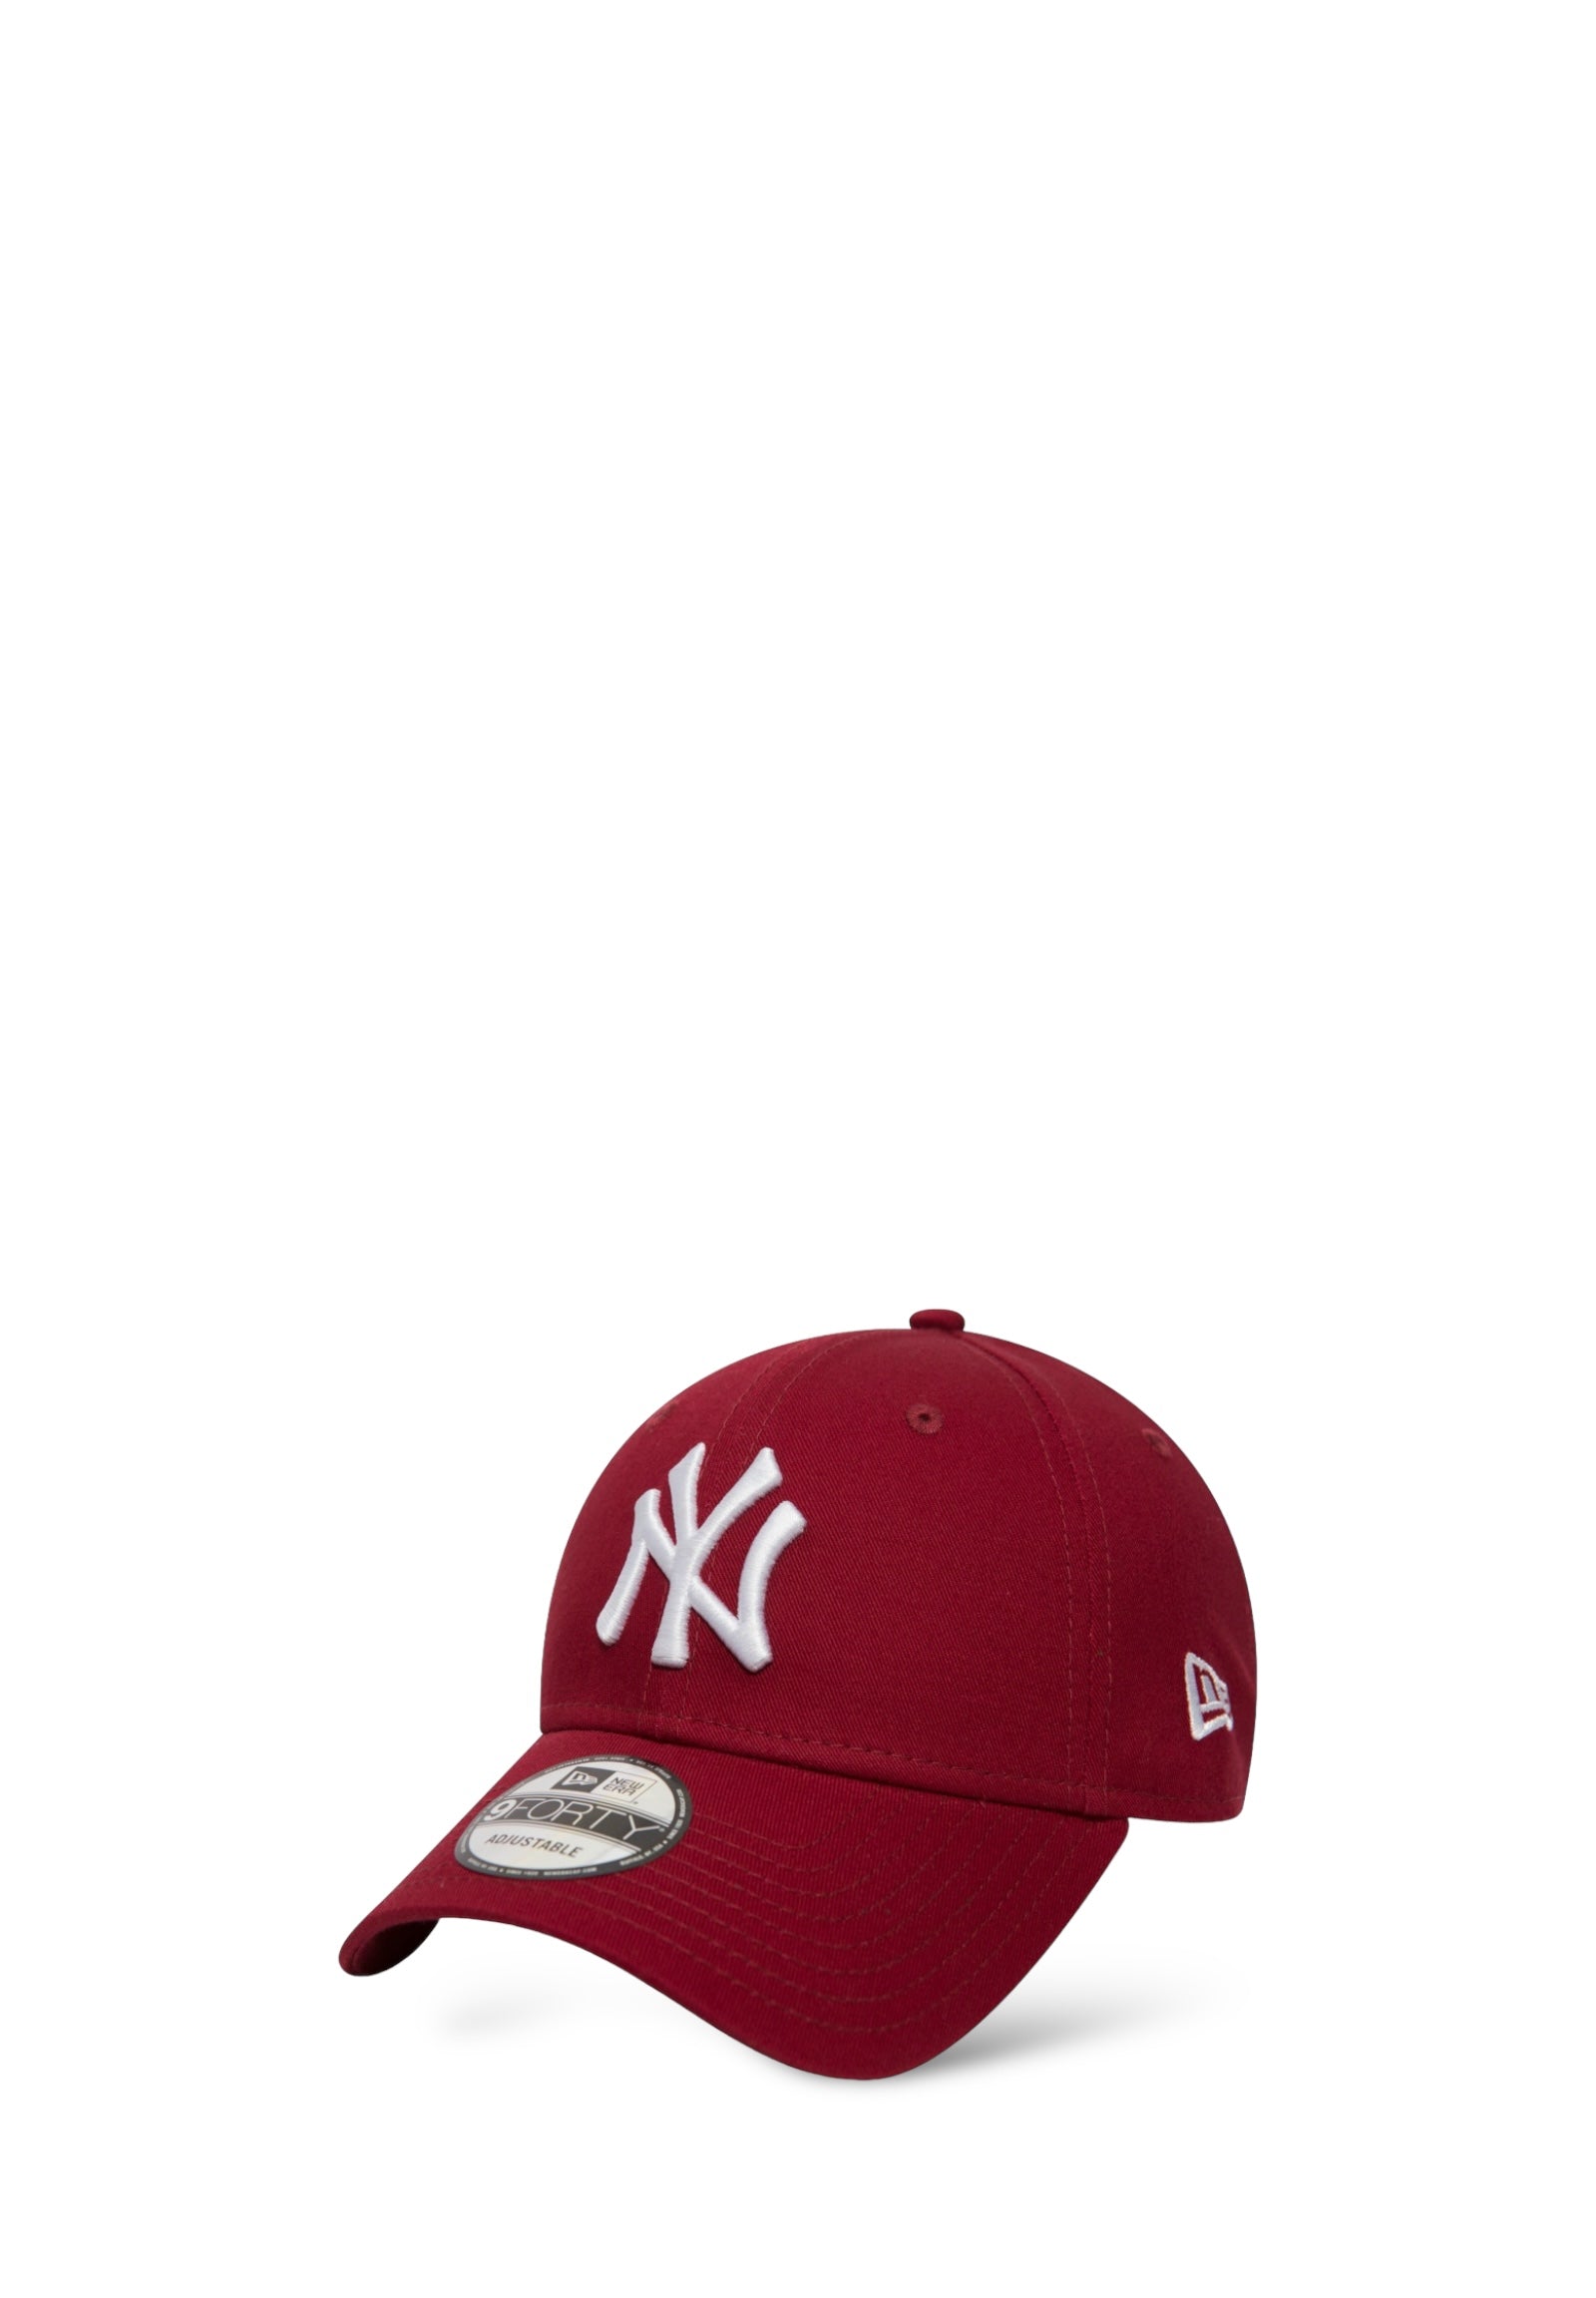 Cappello Da Baseball 80636012 Dark Red